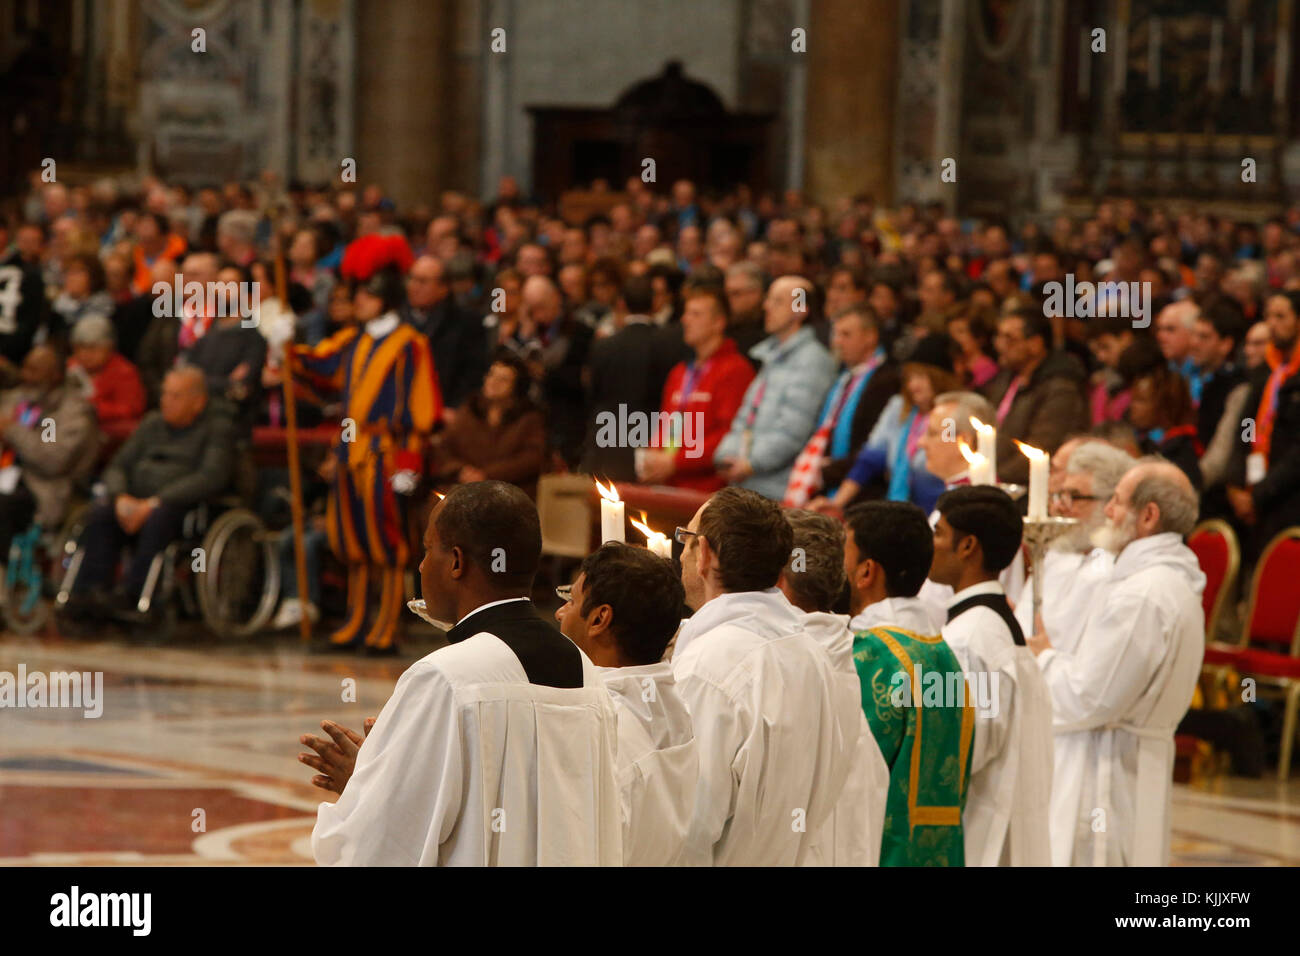 Mass in Saint Peter's basilica, Rome. Italy. Stock Photo